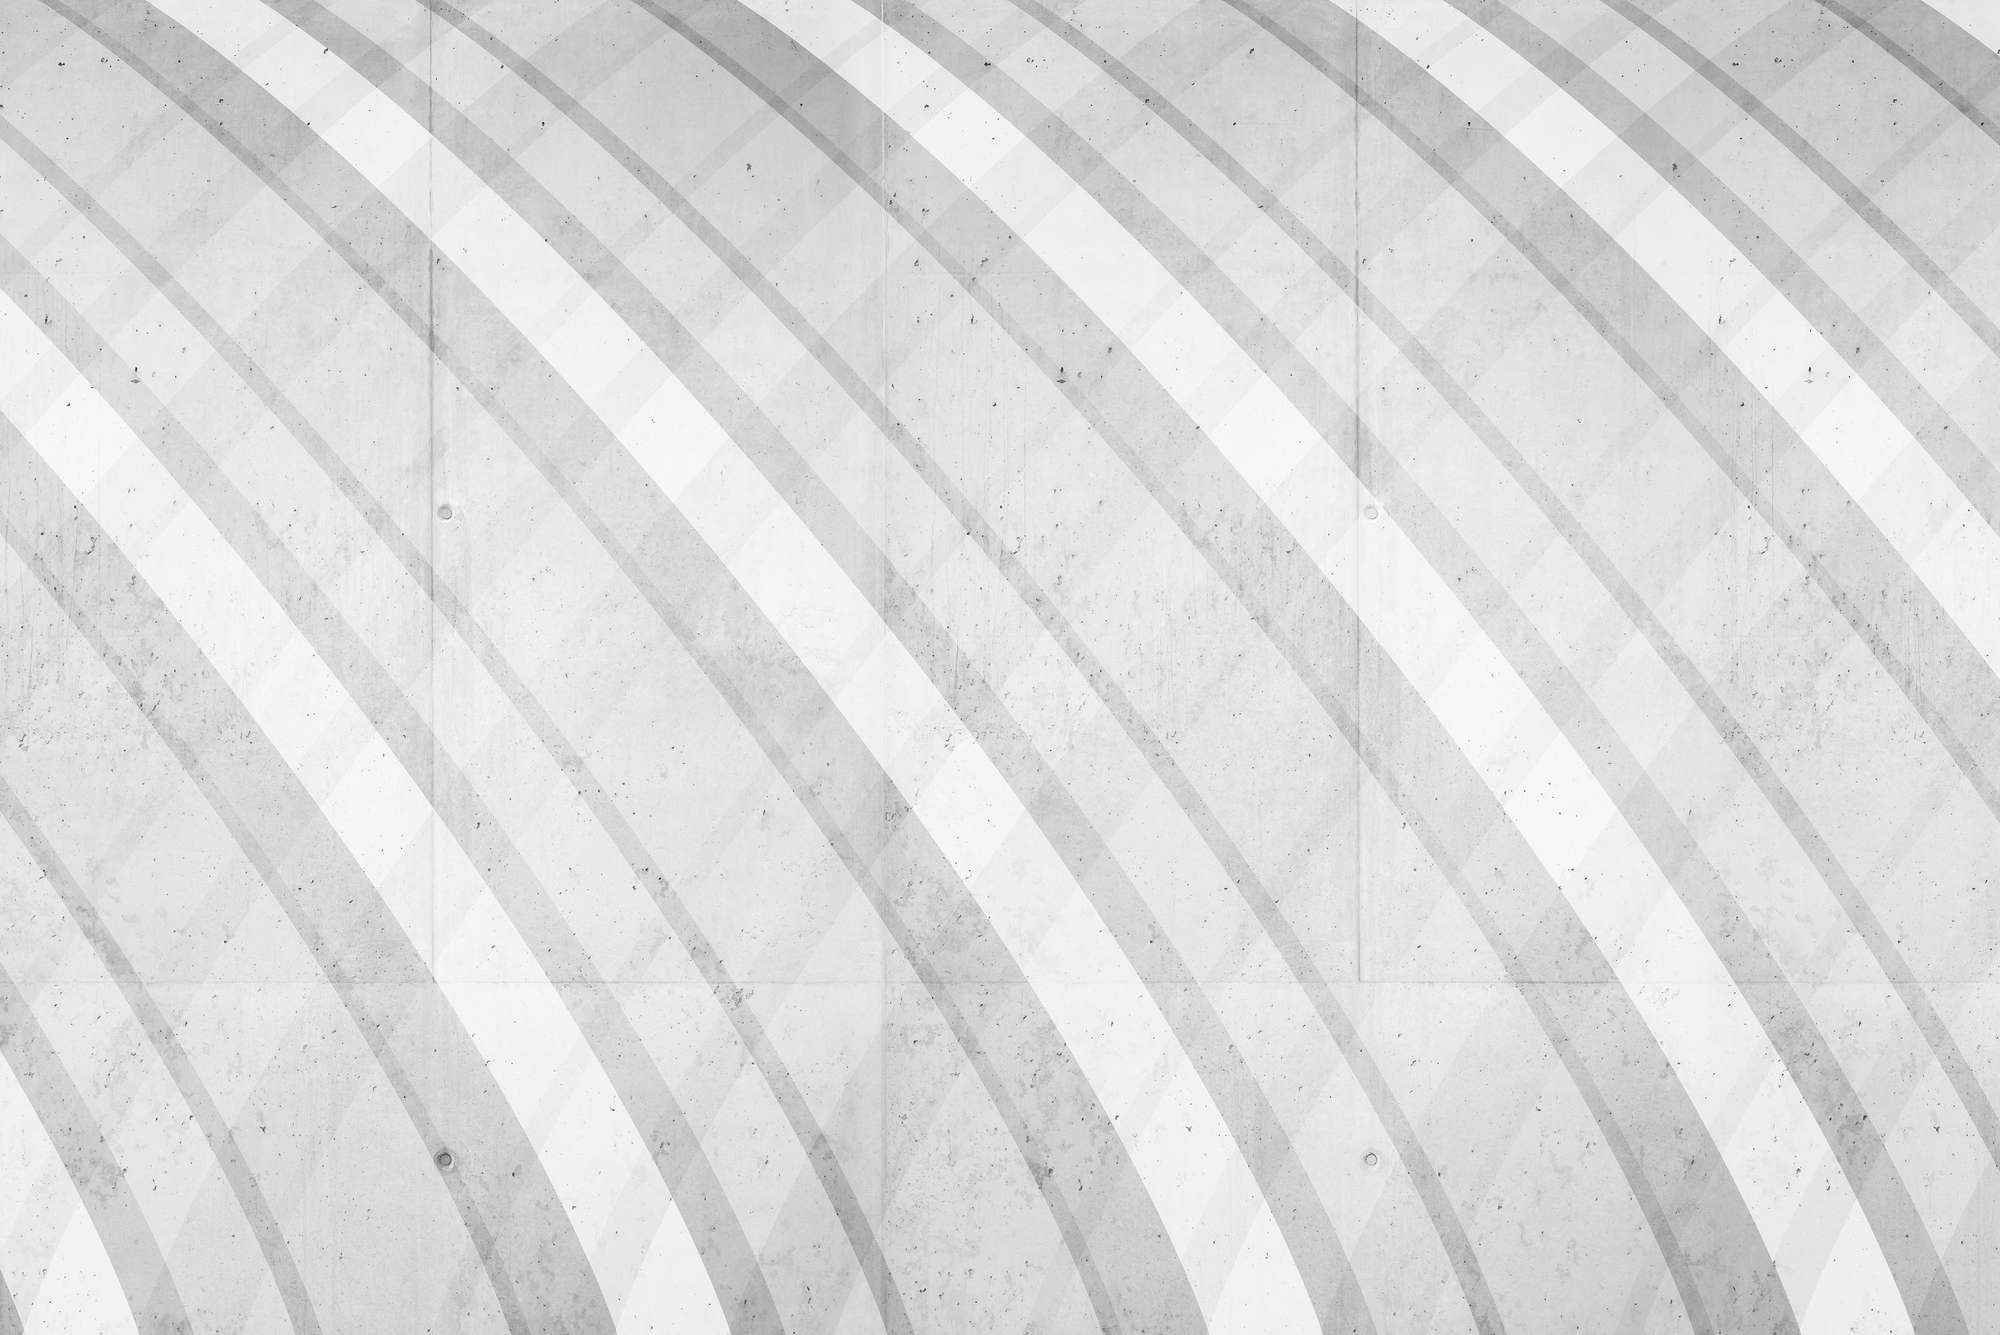             Graphic round stripe pattern grey on textured non-woven wallpaper
        